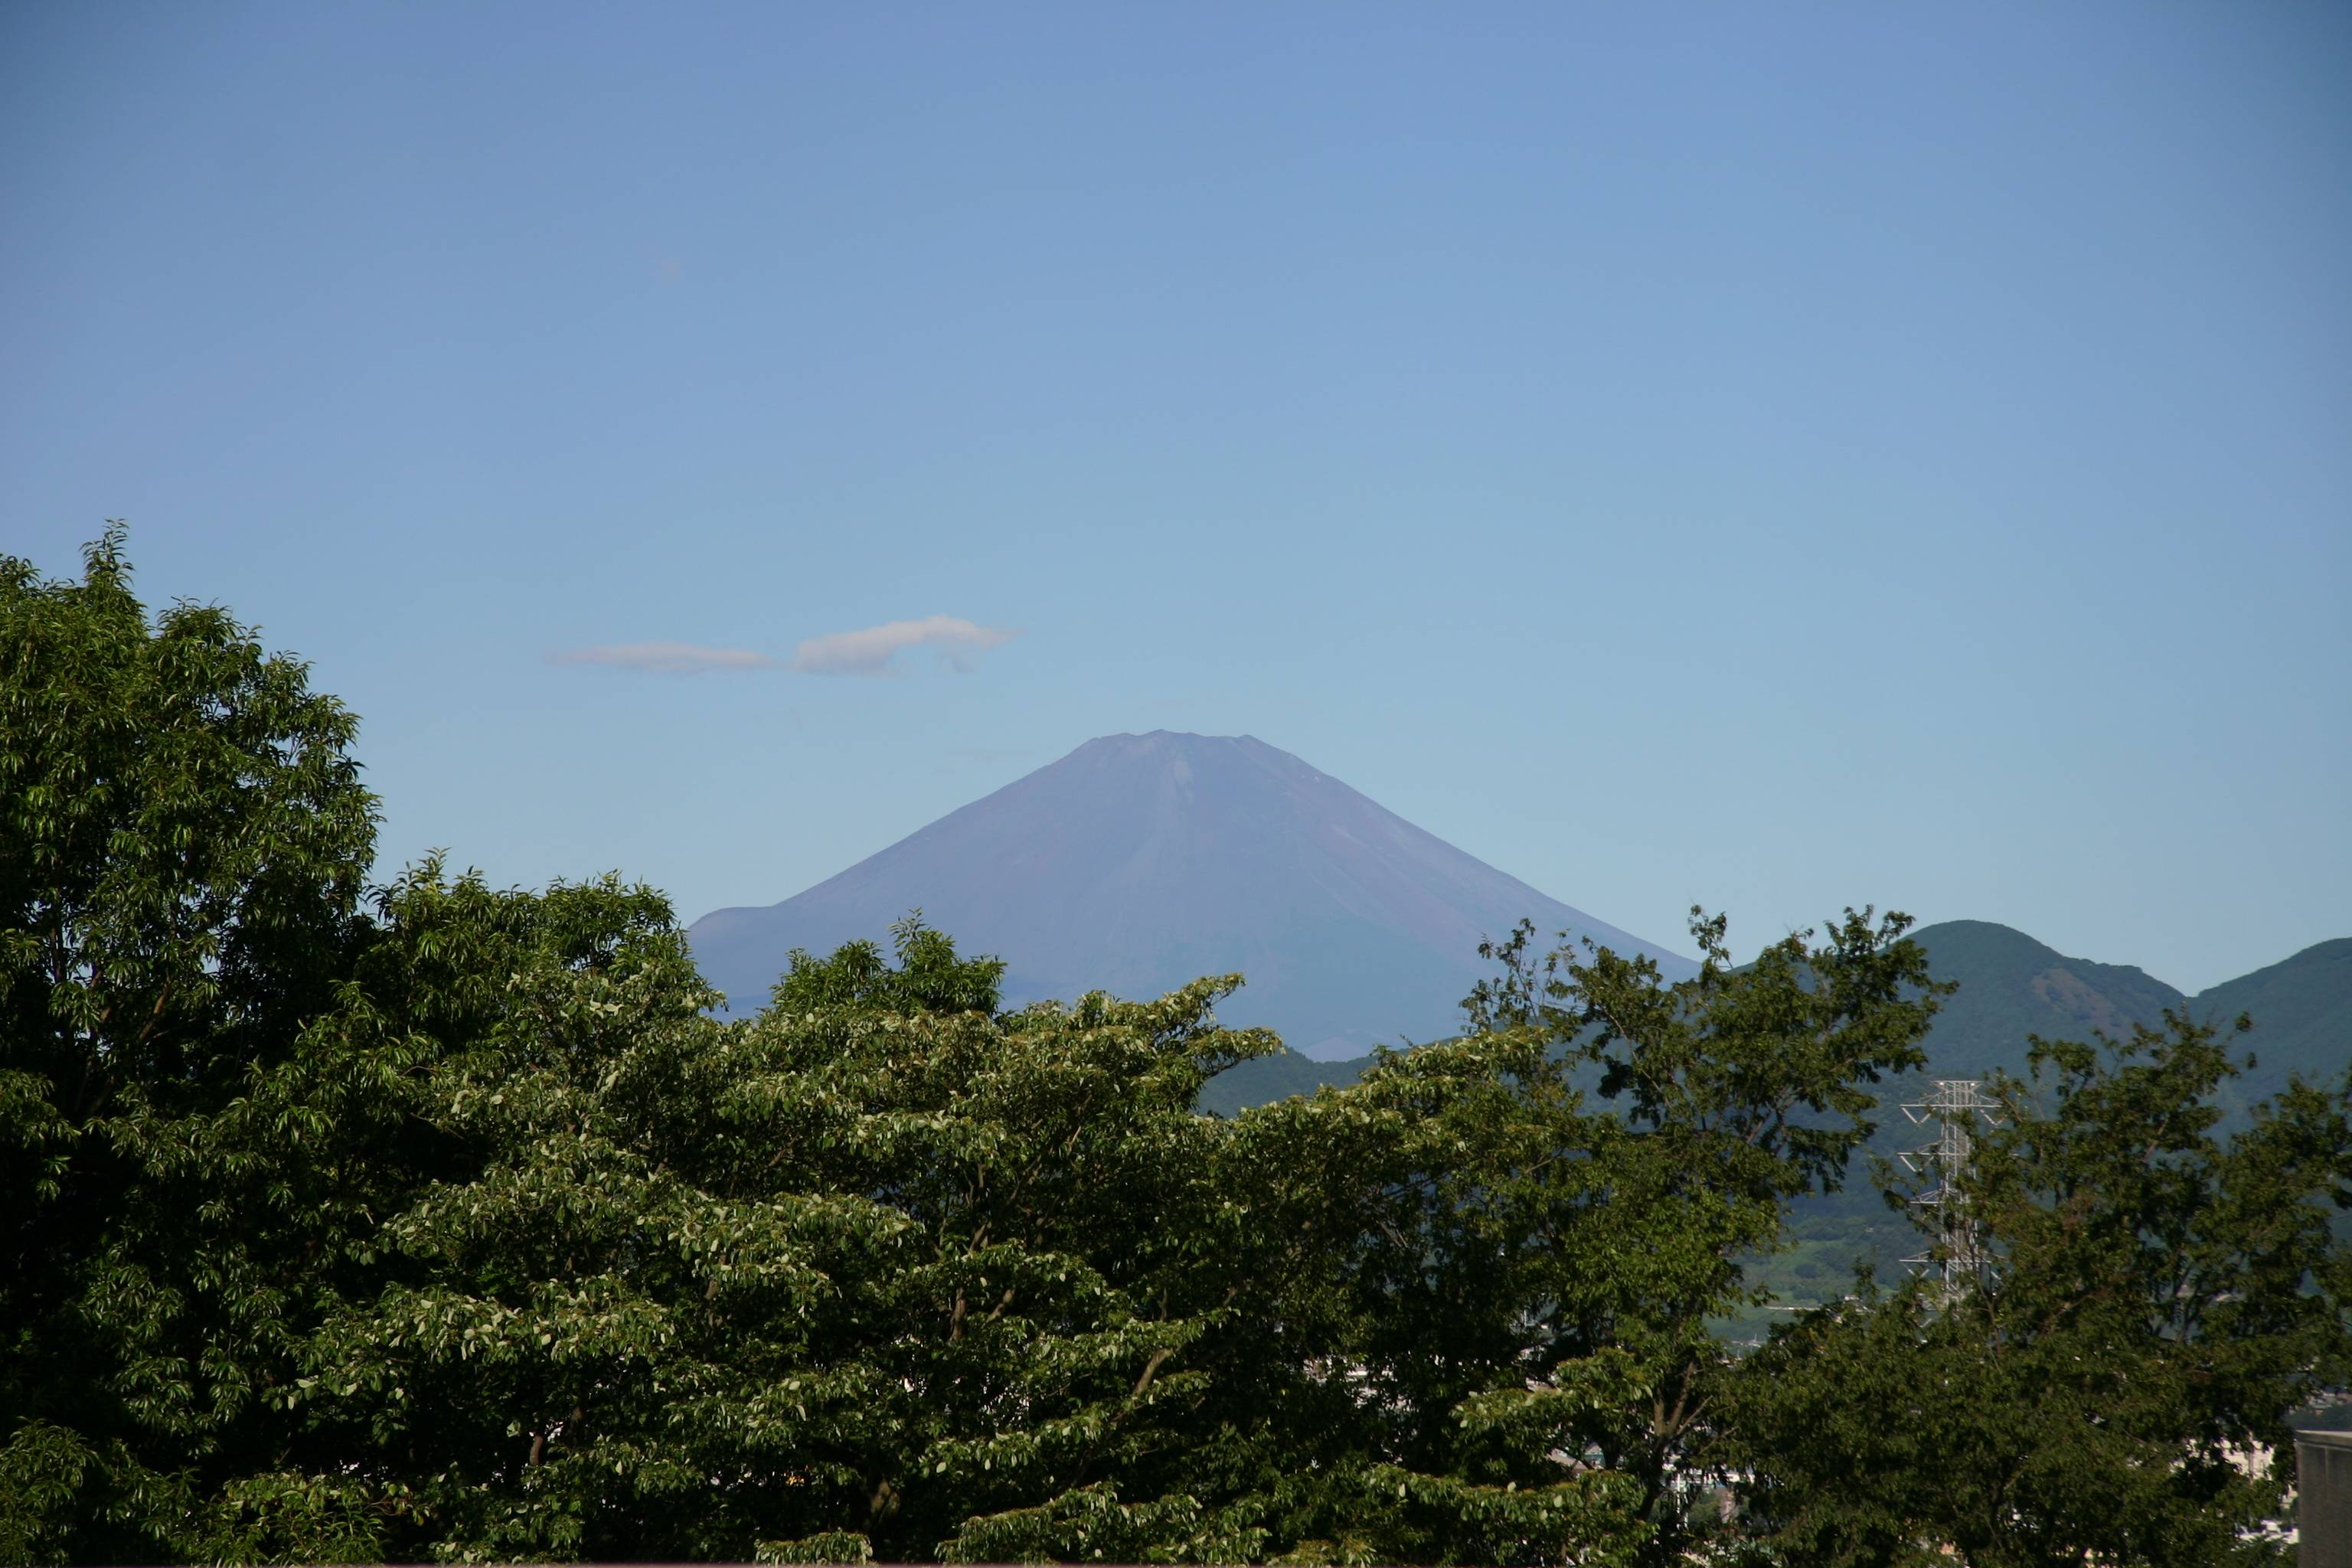 Mt. Fuji, July 27, 2005